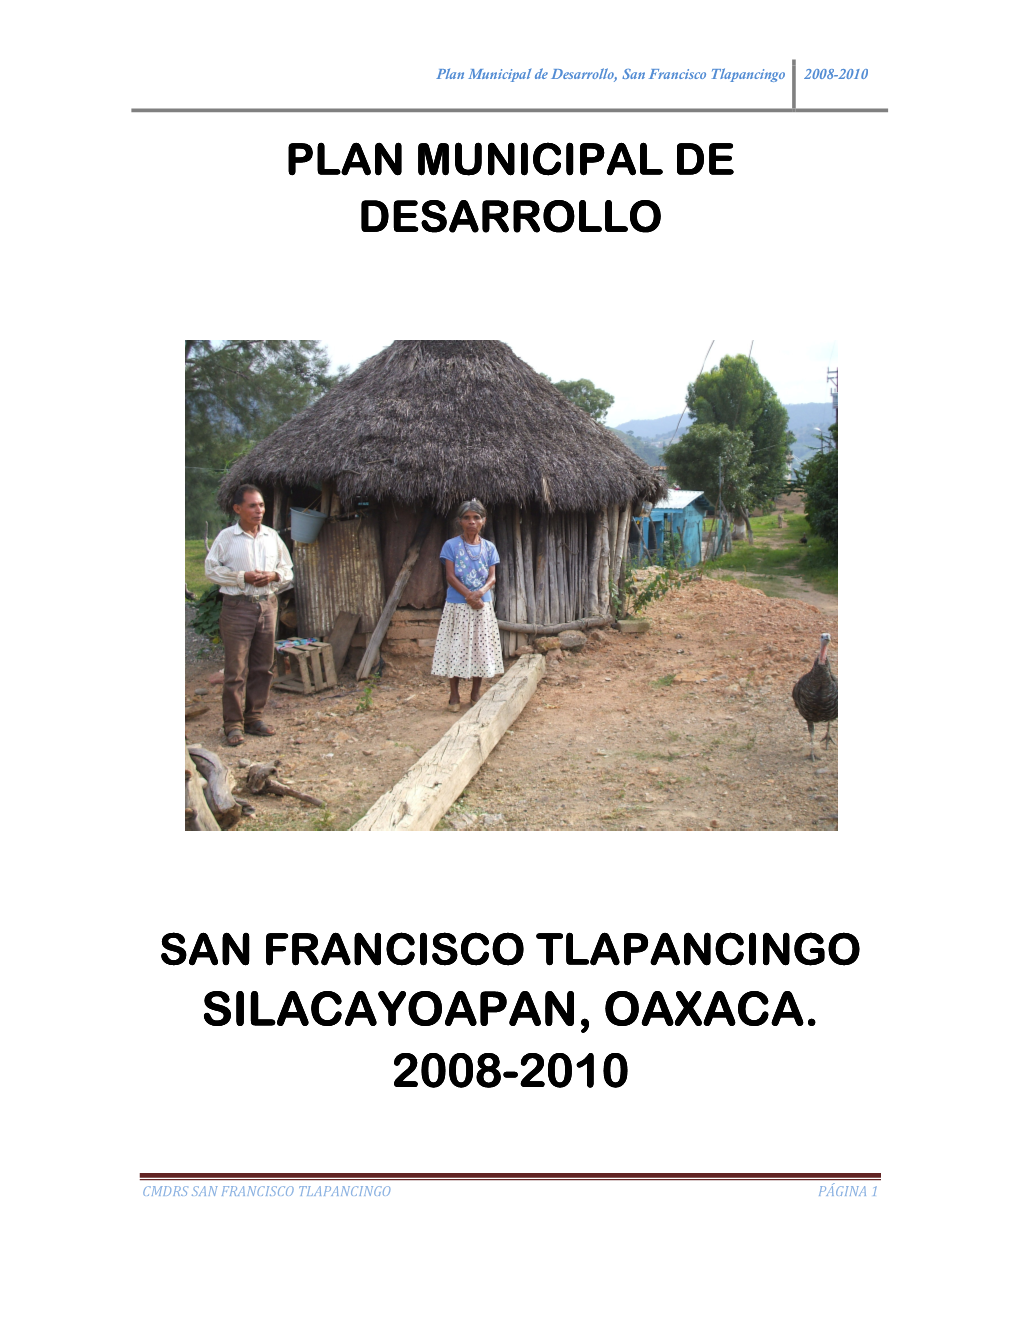 Silacayoapan, Silacayoapan, Oaxaca. 2008-2010